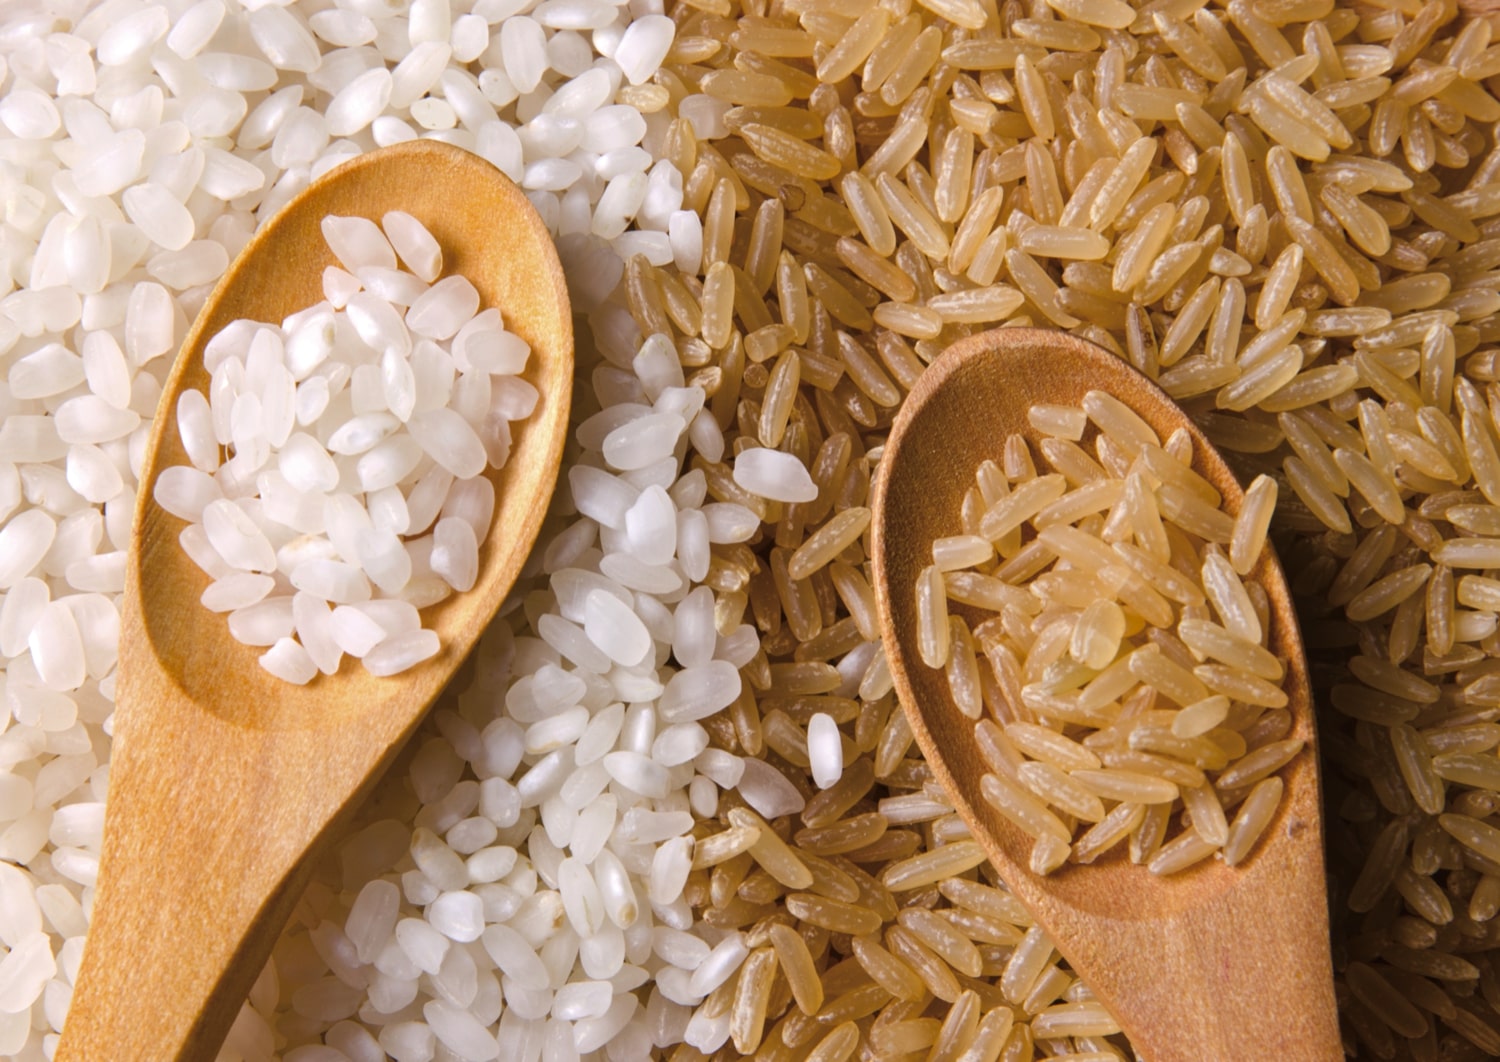 Brown rice vs white rice